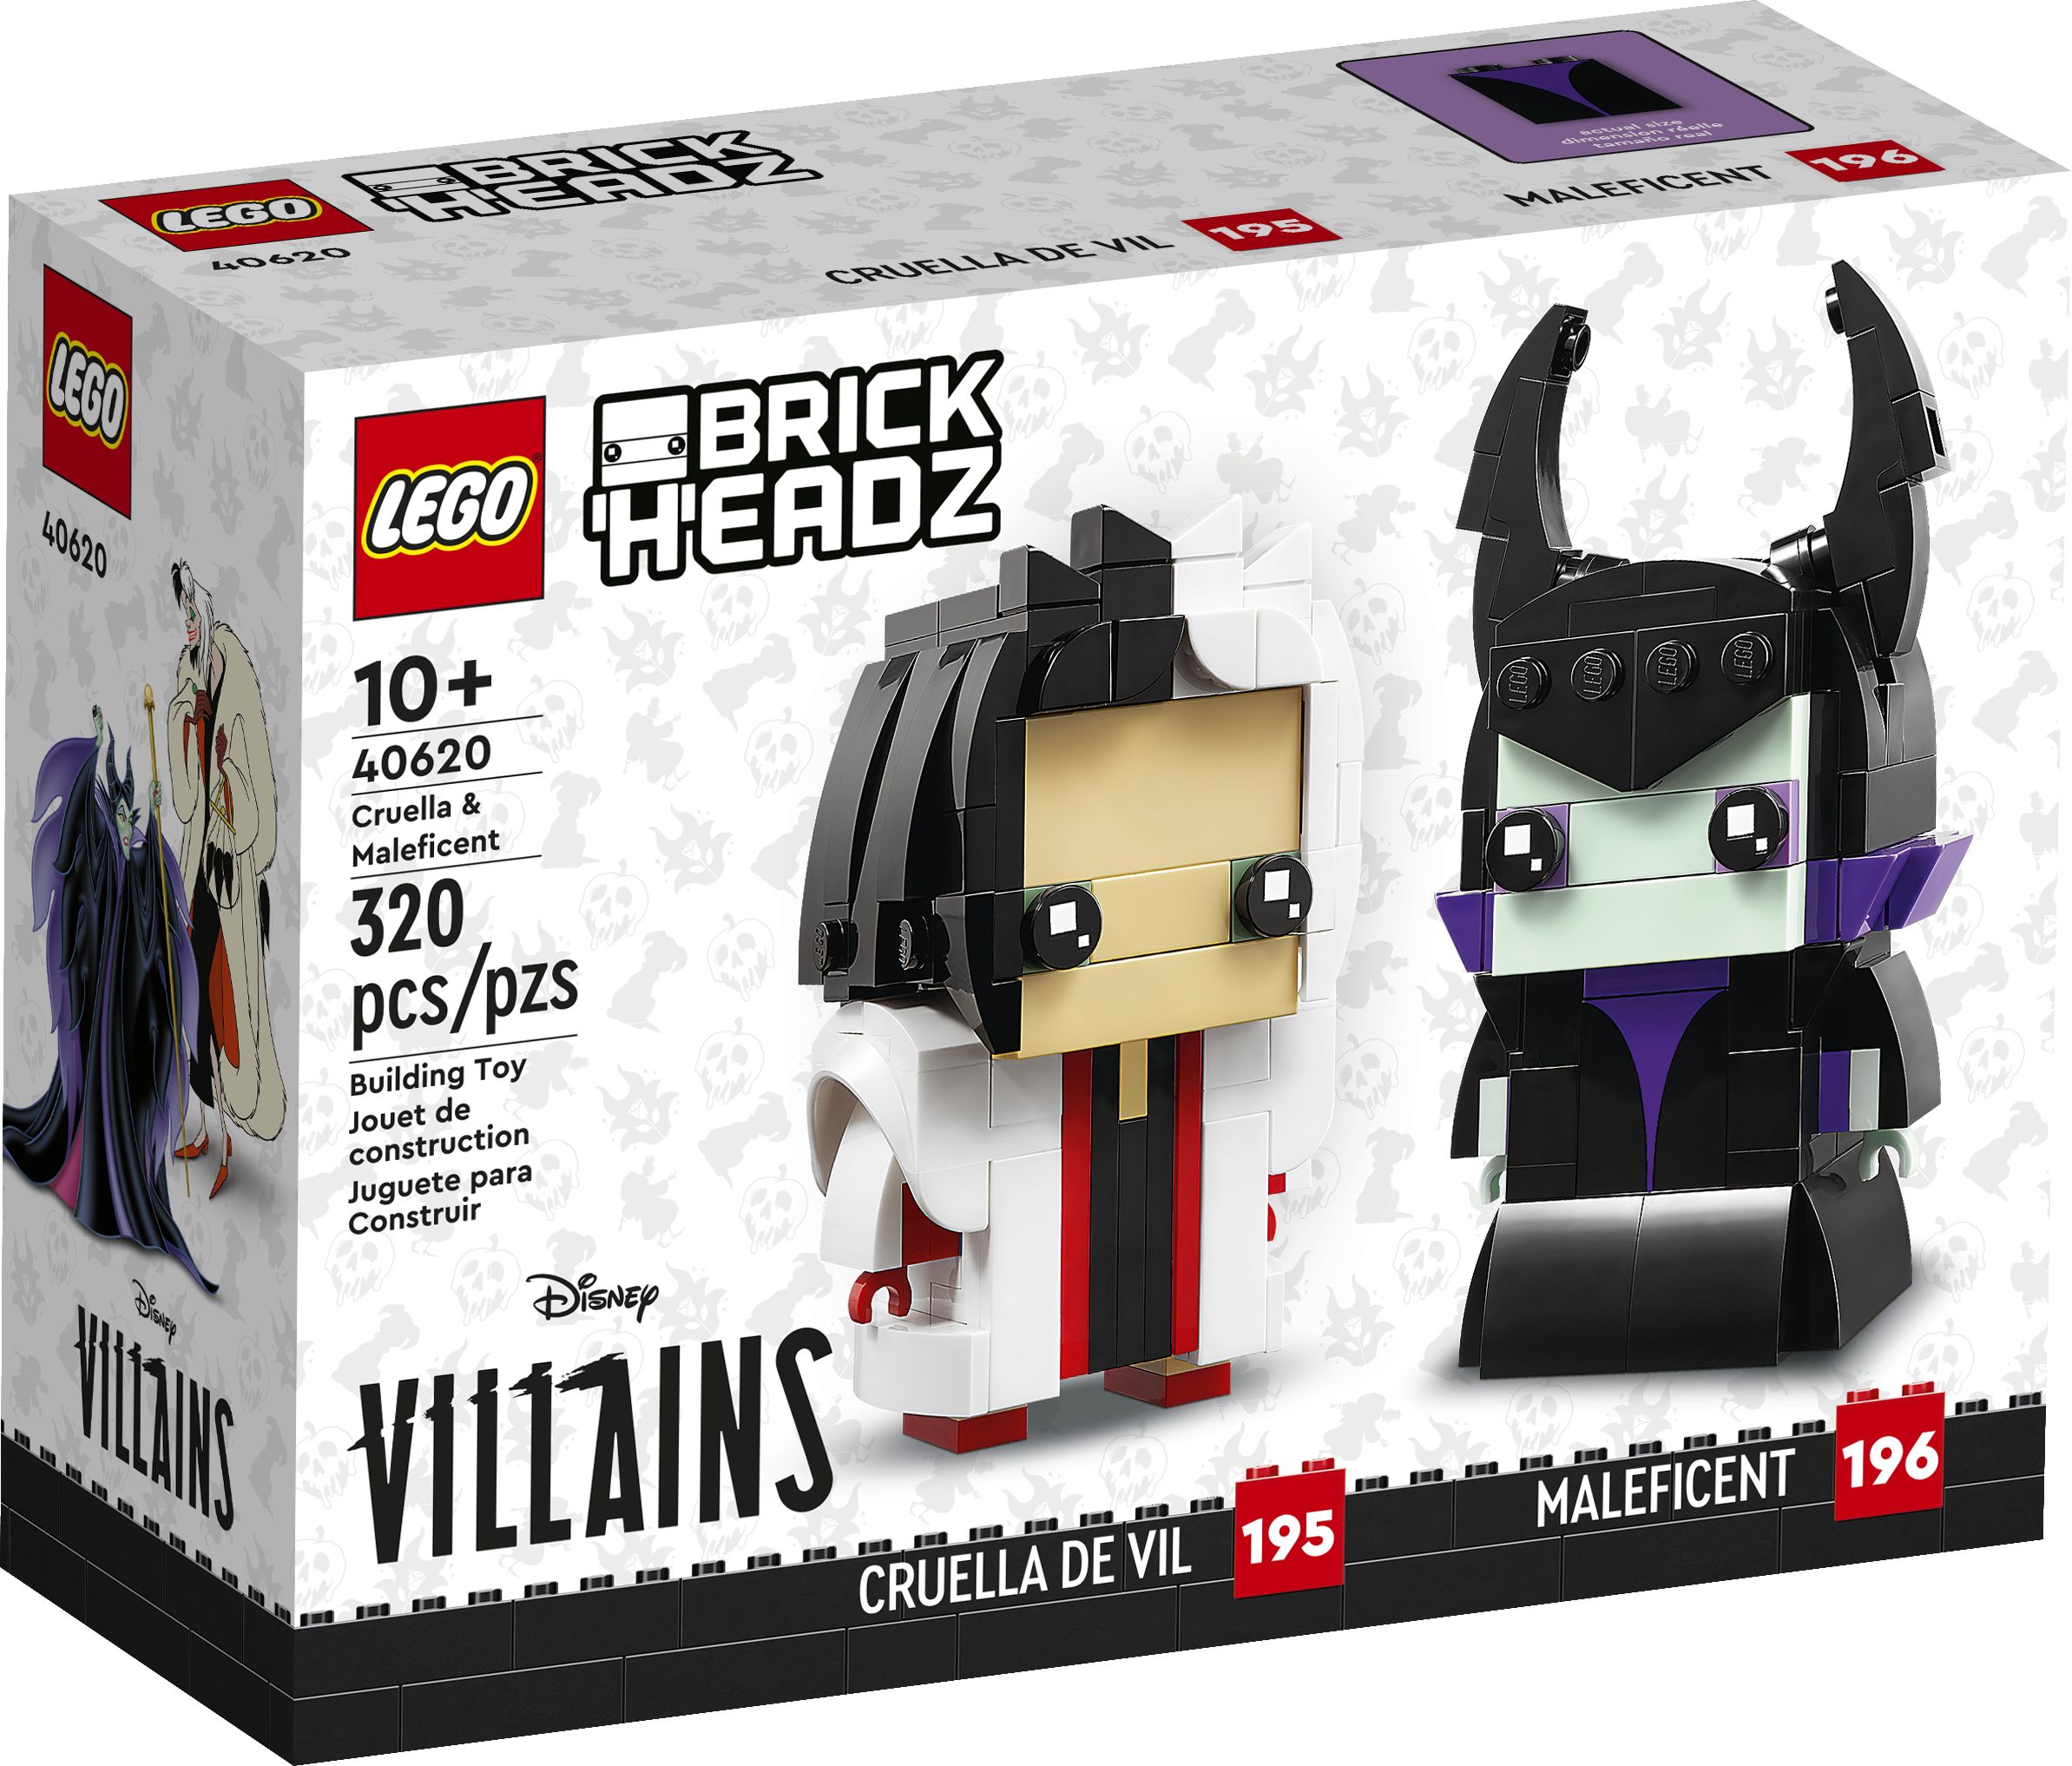 LEGO BrickHeadz 40620 Cruella und Maleficent LEGO_40620_Box1_v39.jpg